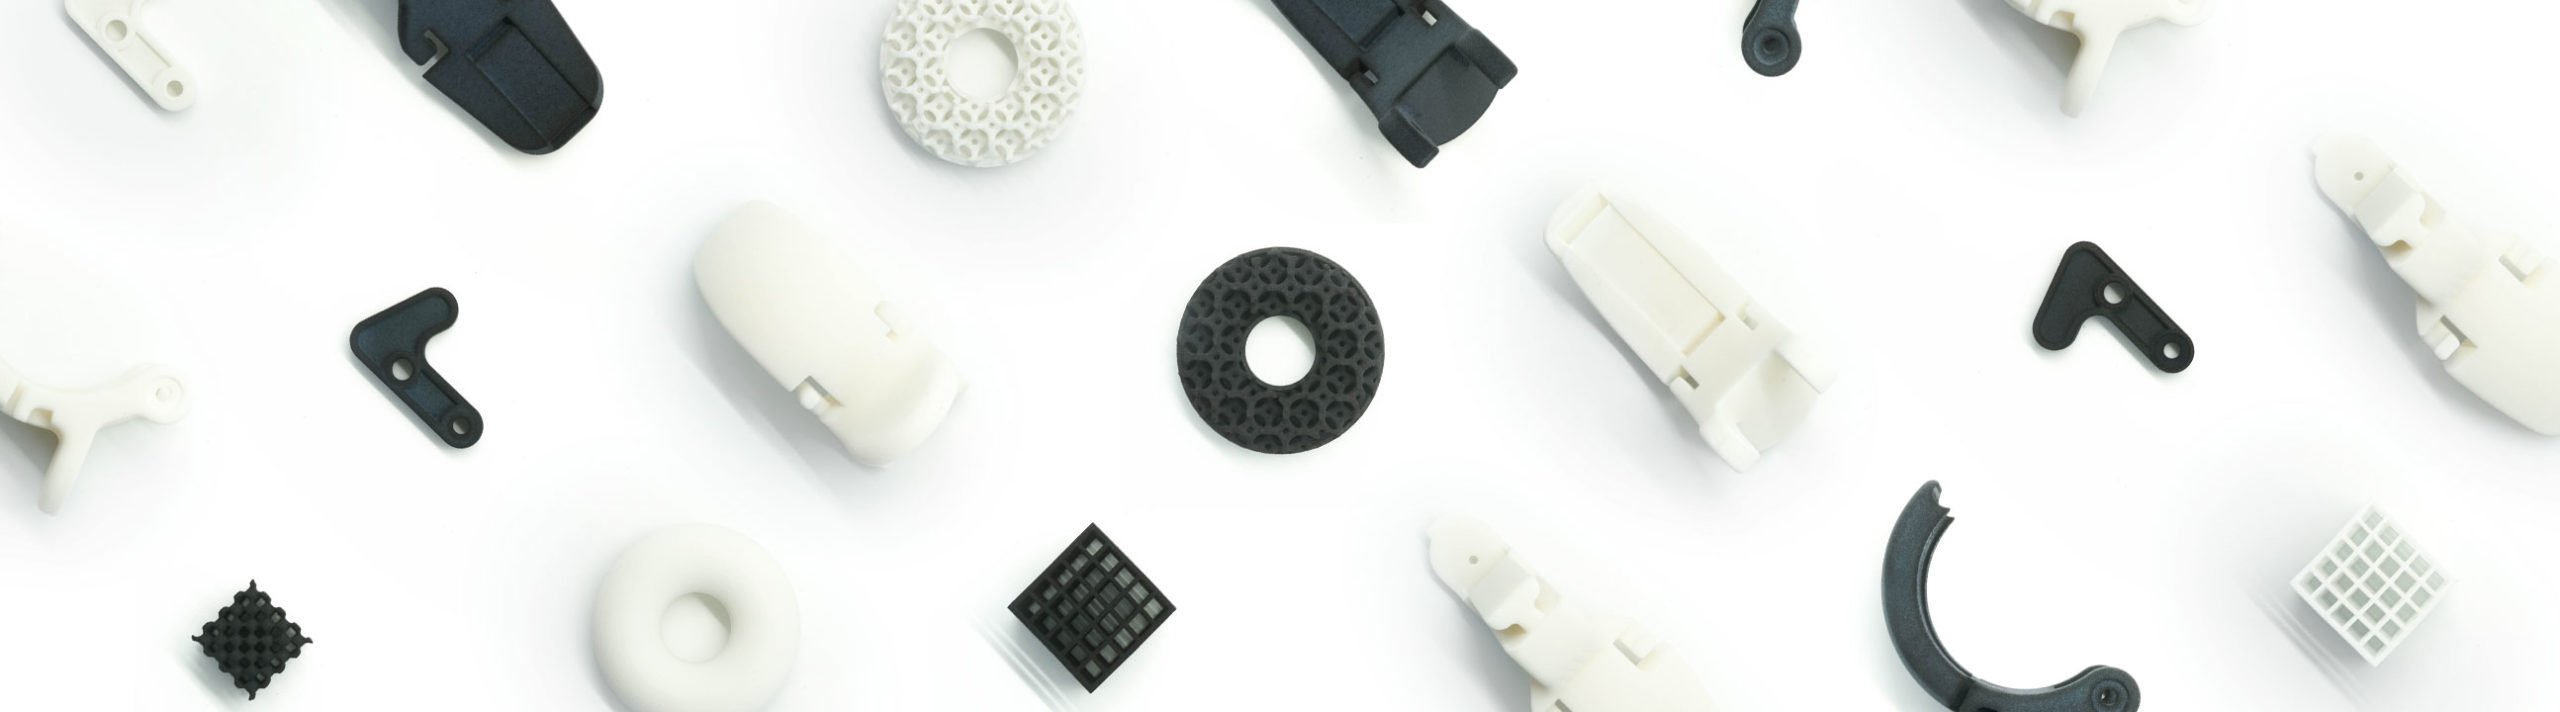 TPE (Thermoplastic Elastomer) - 3D Printing Material - Shapeways